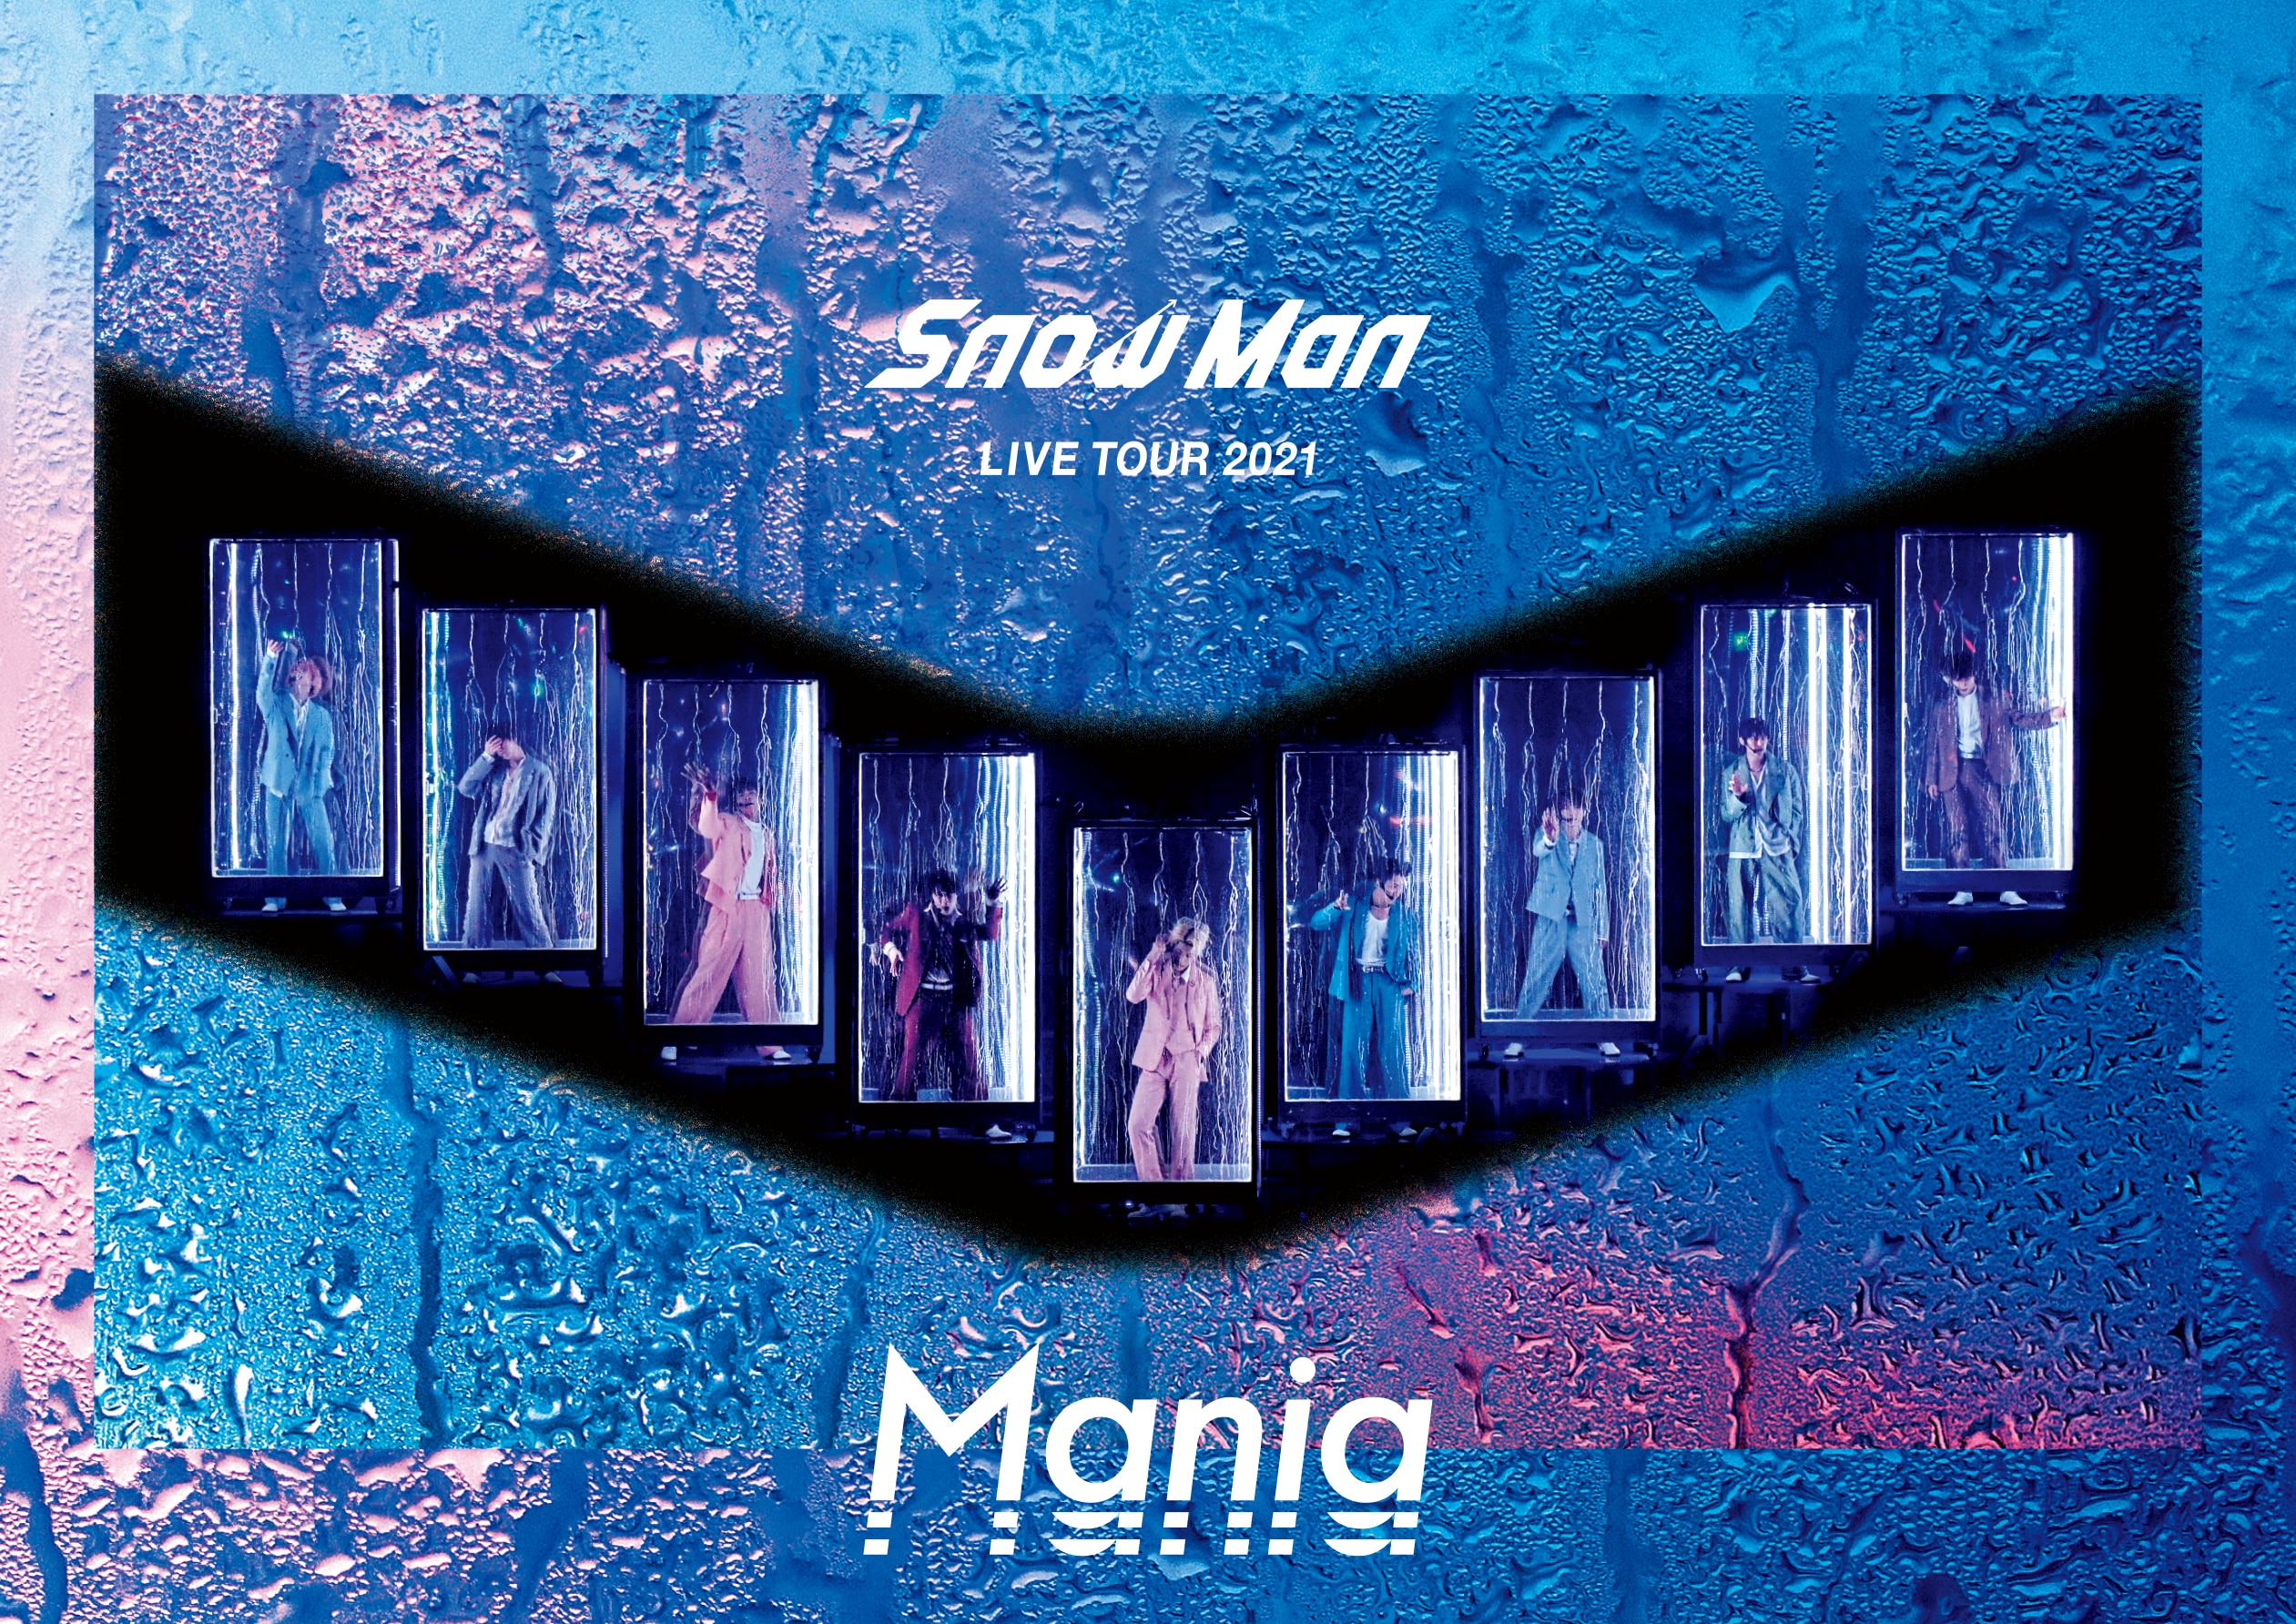 Snow Man LIVE TOUR 2021 Mania 初回 Blu-ray